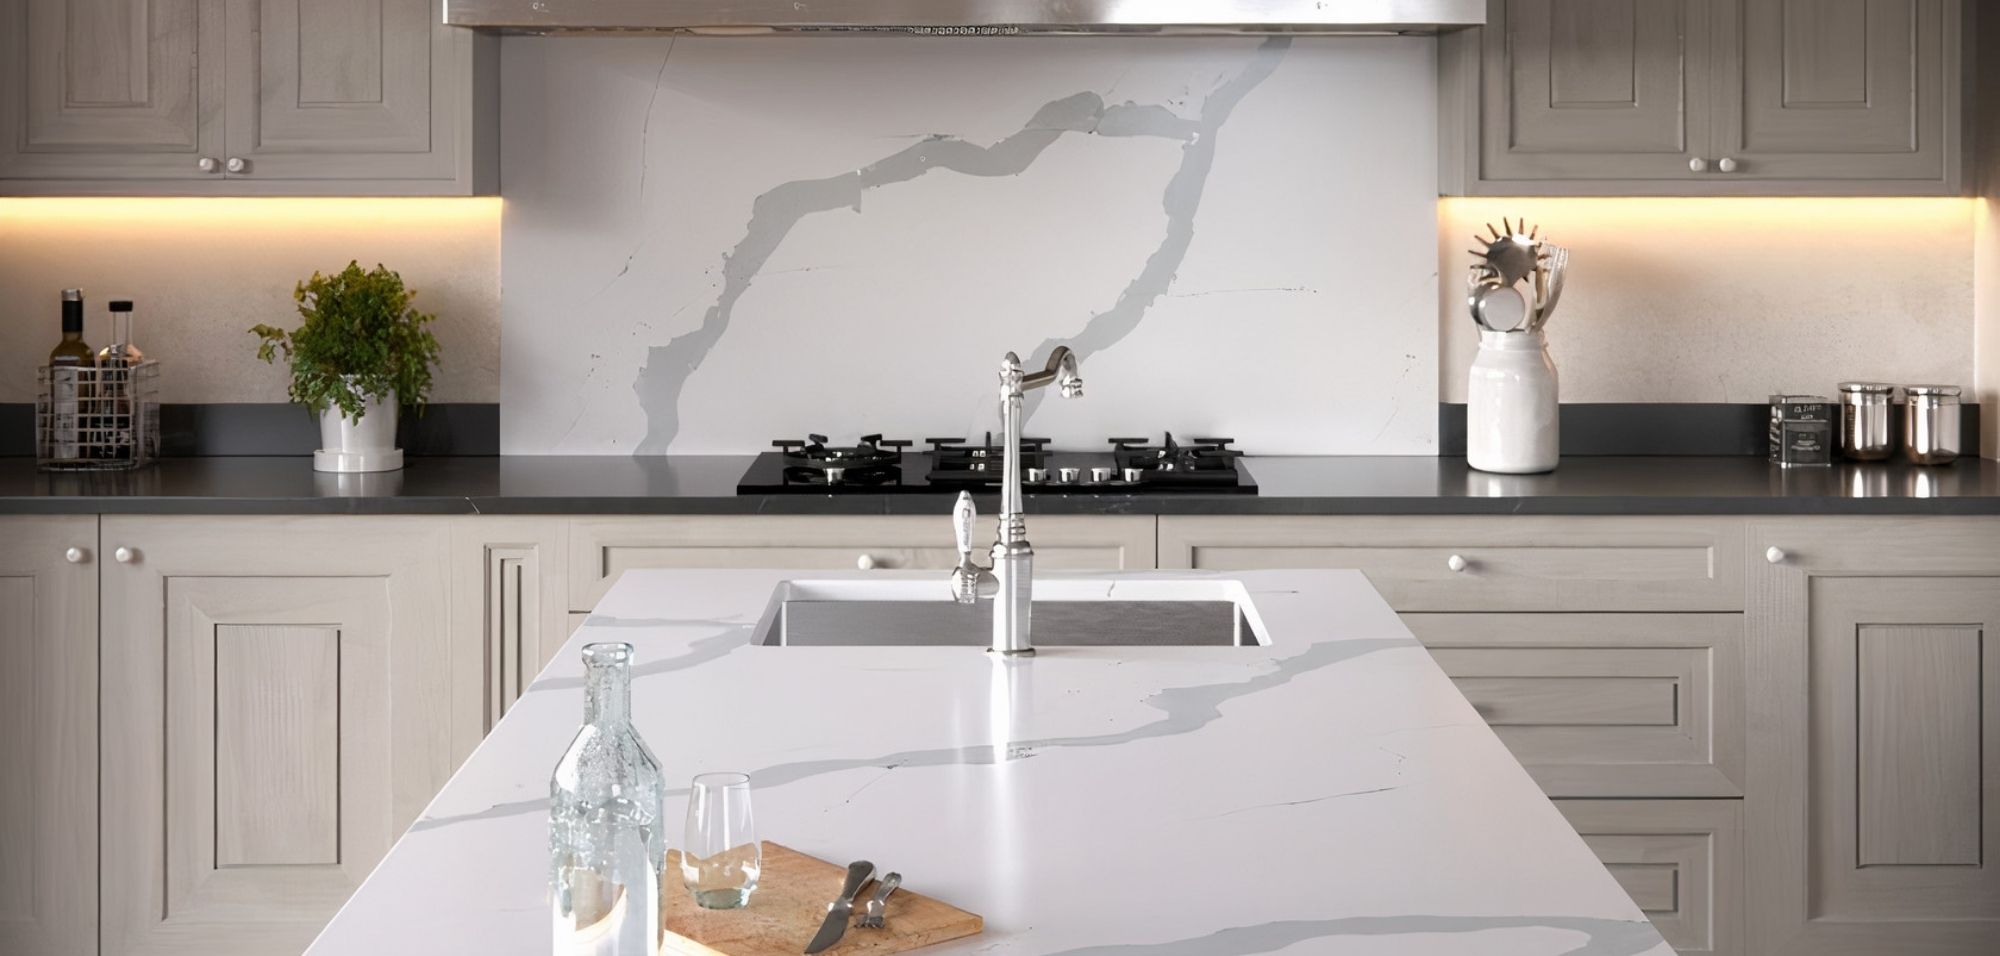 Bianco Calacatta Silestone Quartz Kitchen Countertops and Full Height Backsplash What is SIlestone Quartz